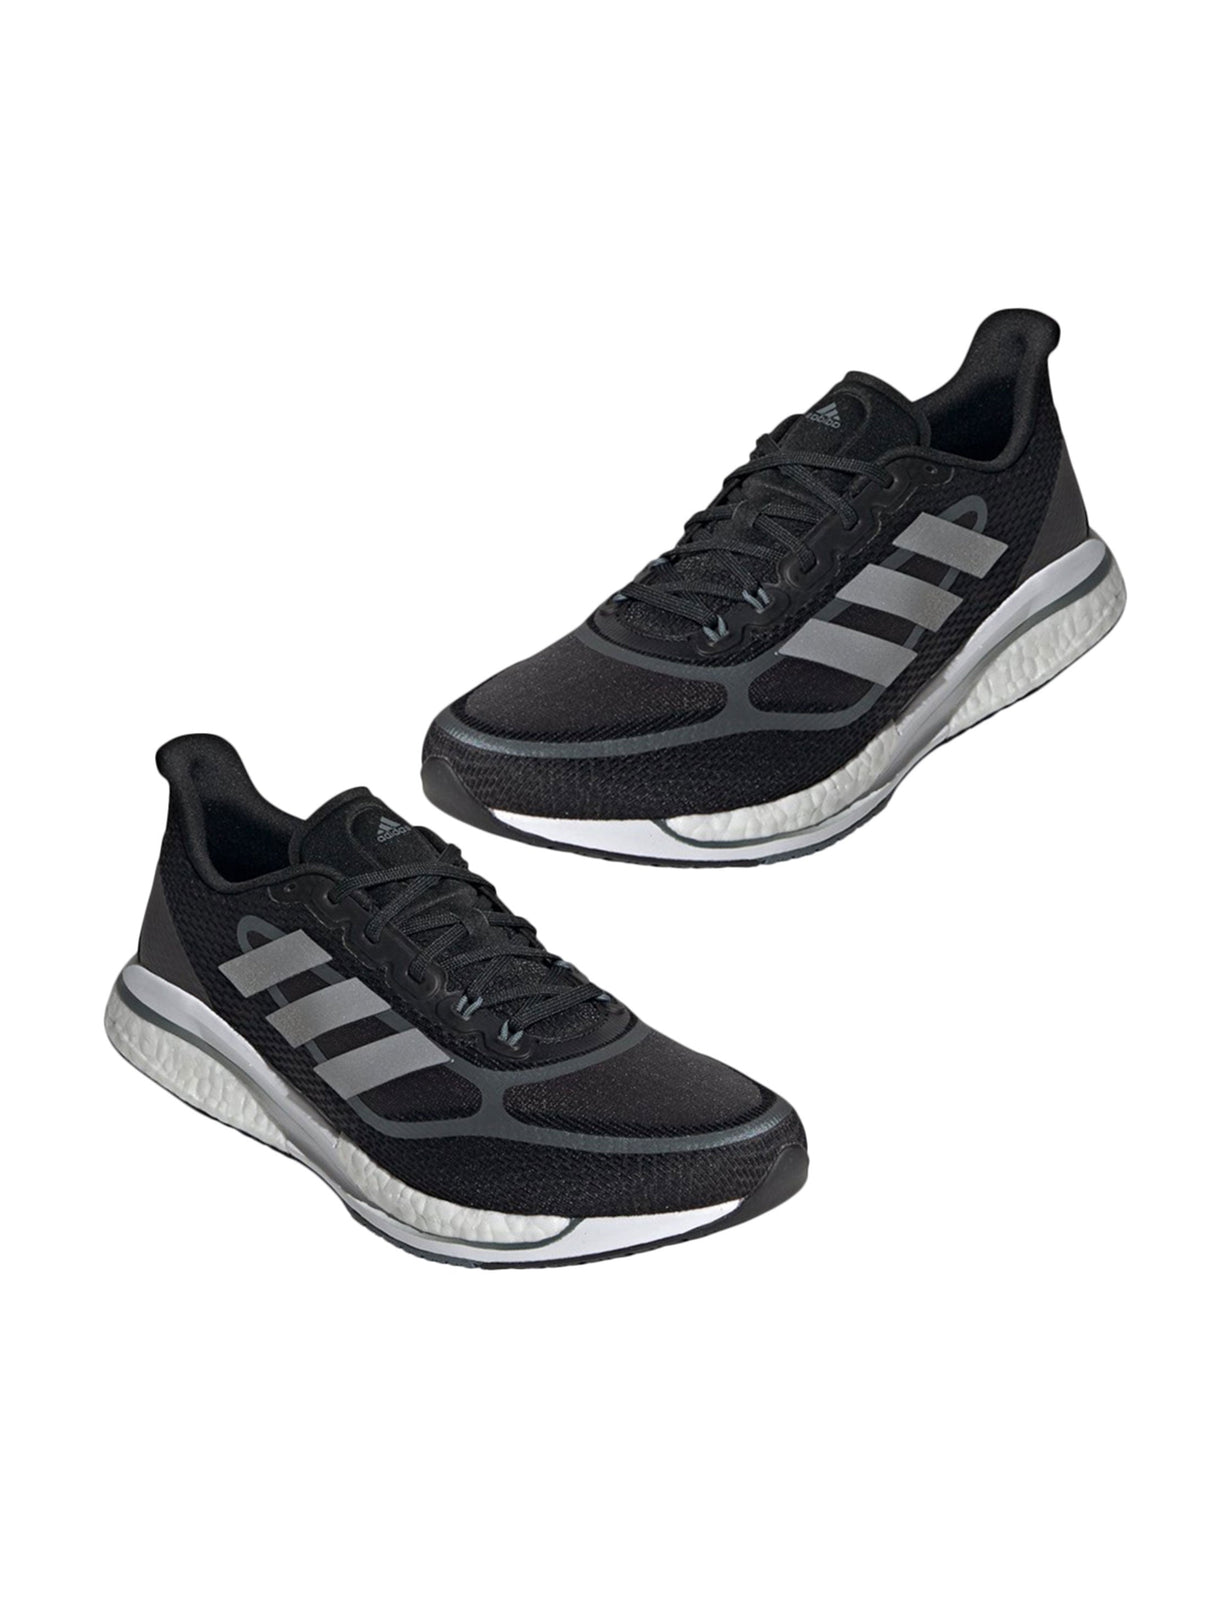 Image for Women's Lightweight  Running Shoes,Black